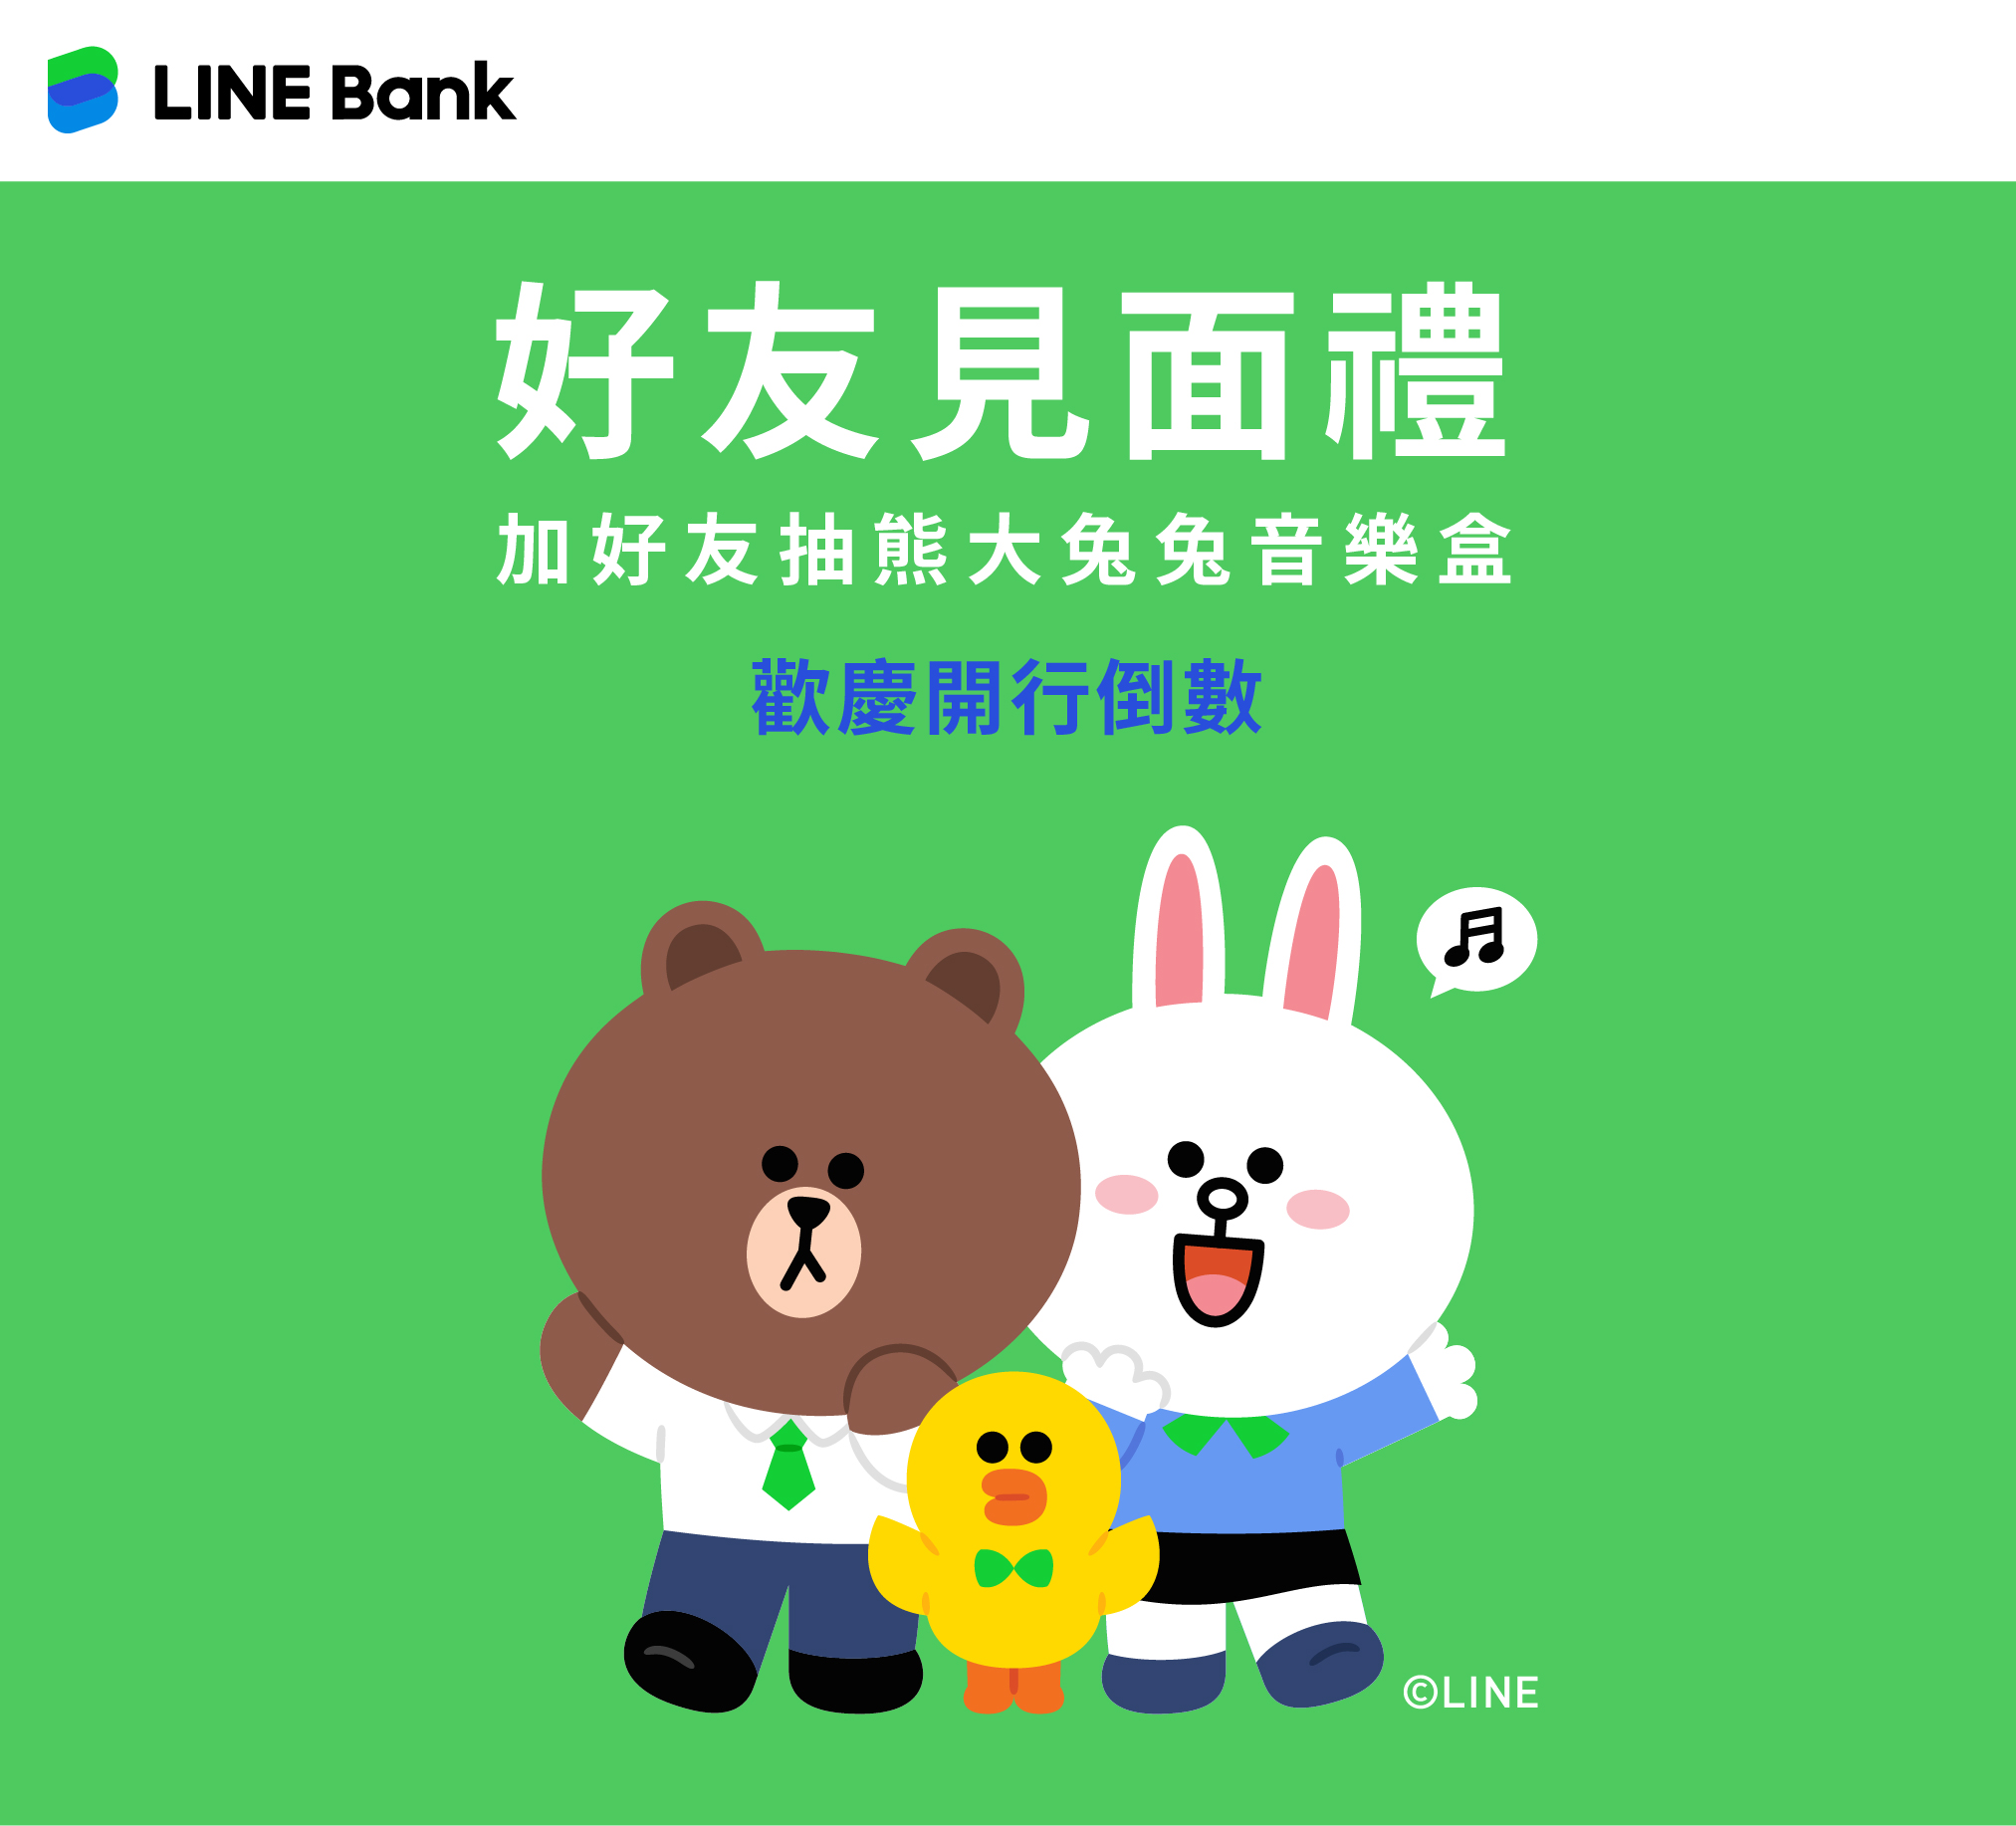 Line Bank Taiwan 最新消息 開行倒數計時line Bank相揪好友搶當早鳥